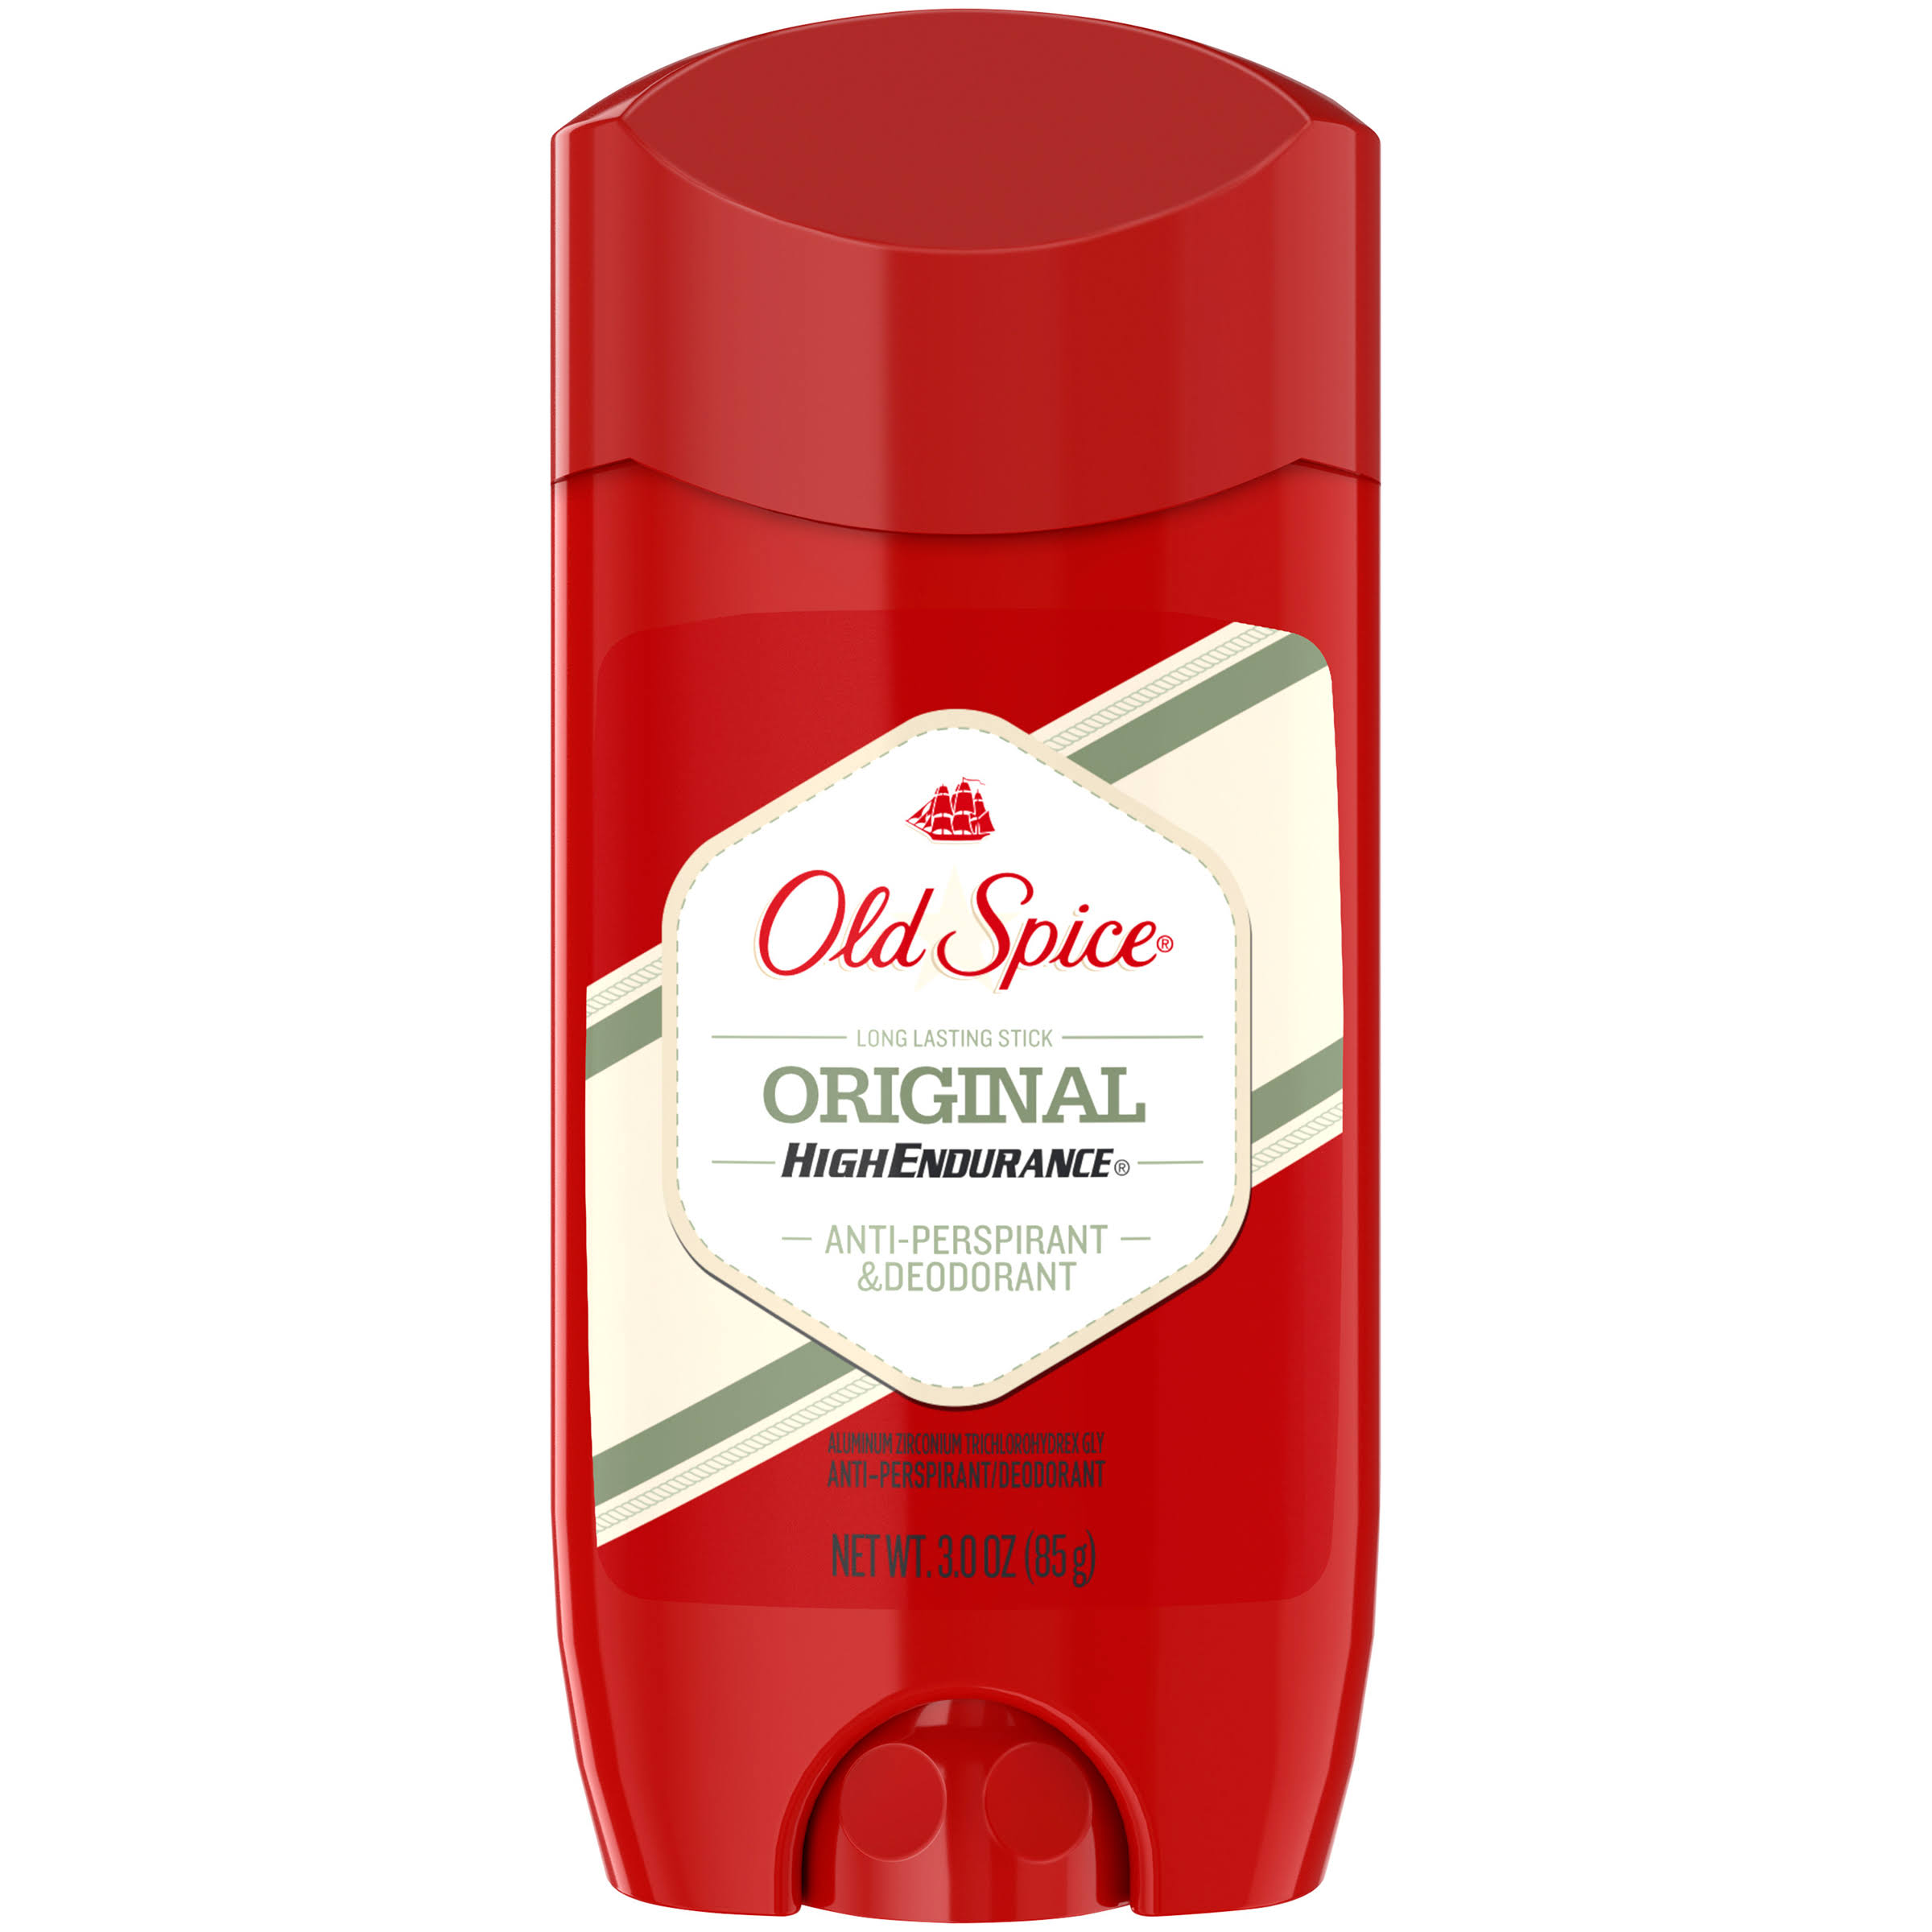 Old Spice Original High Endurance Anti-perspirant & Deodorant